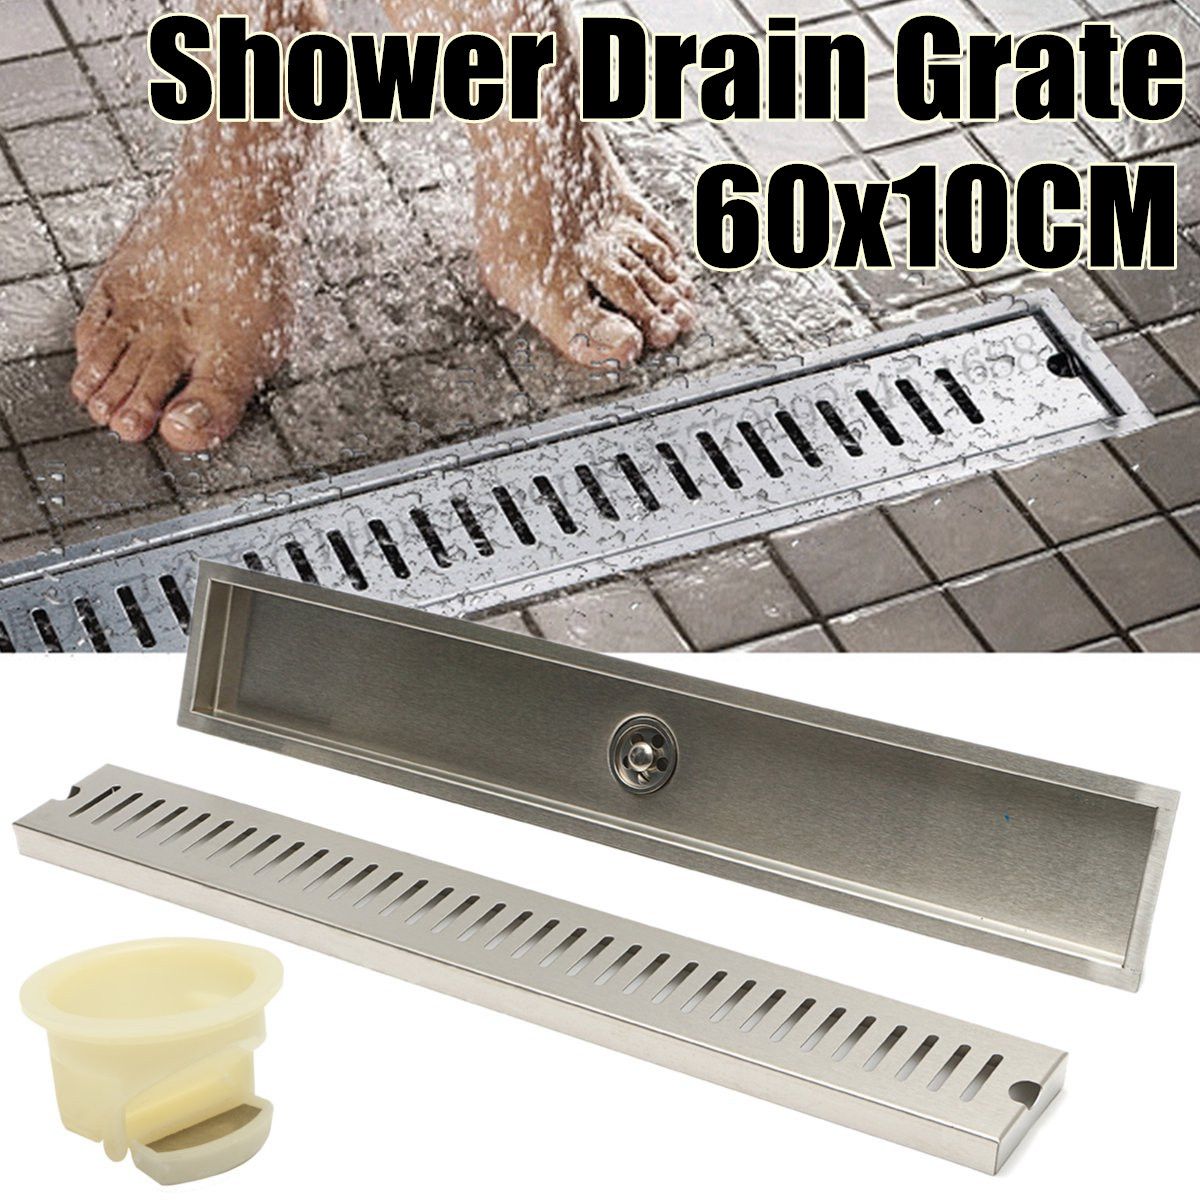 600mm-Stainless-Steel-Drain-Grate-Brushed-Insert-Linear-Bathroom-Shower-Floor-Drain-1210009